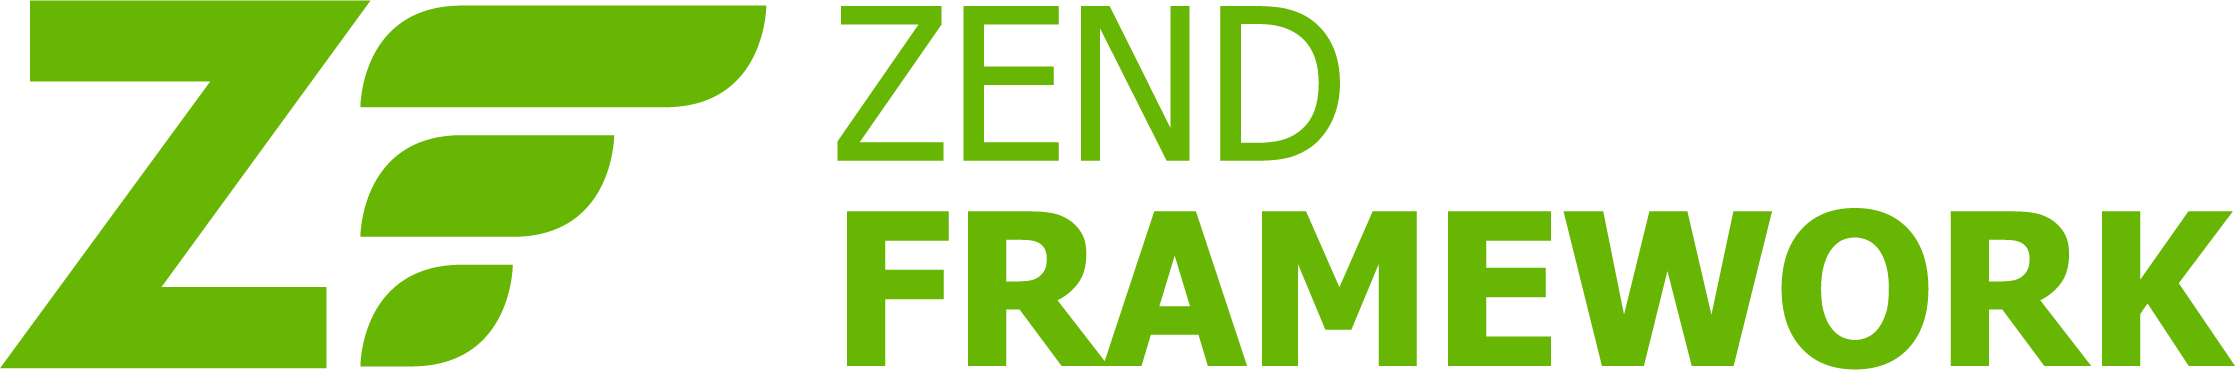 zend-logo